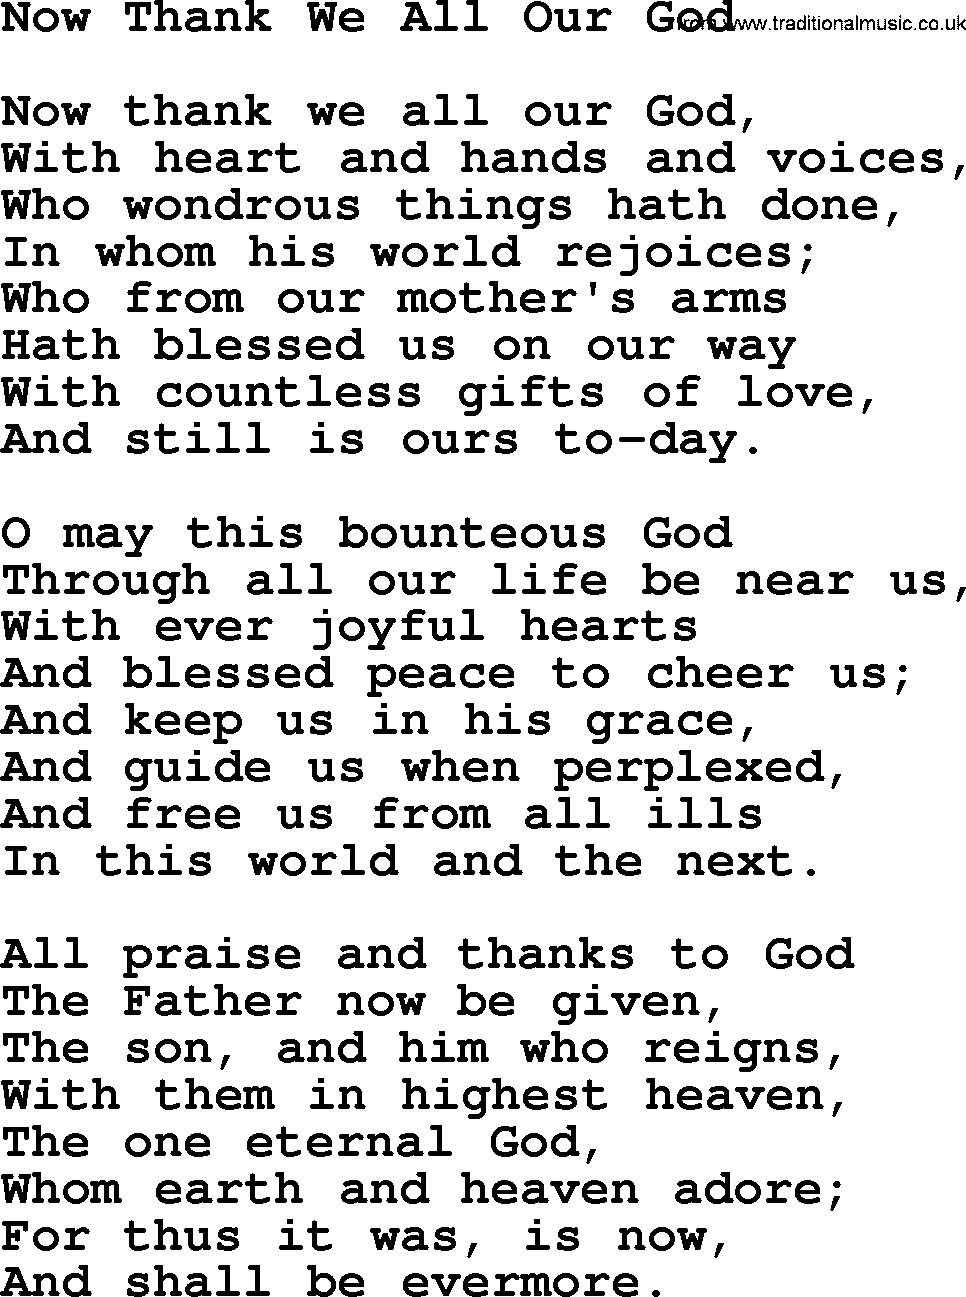 Most Popular Christian Wedding Hymns, Hymn: Now Thank We All Our God, lyrics and PDF